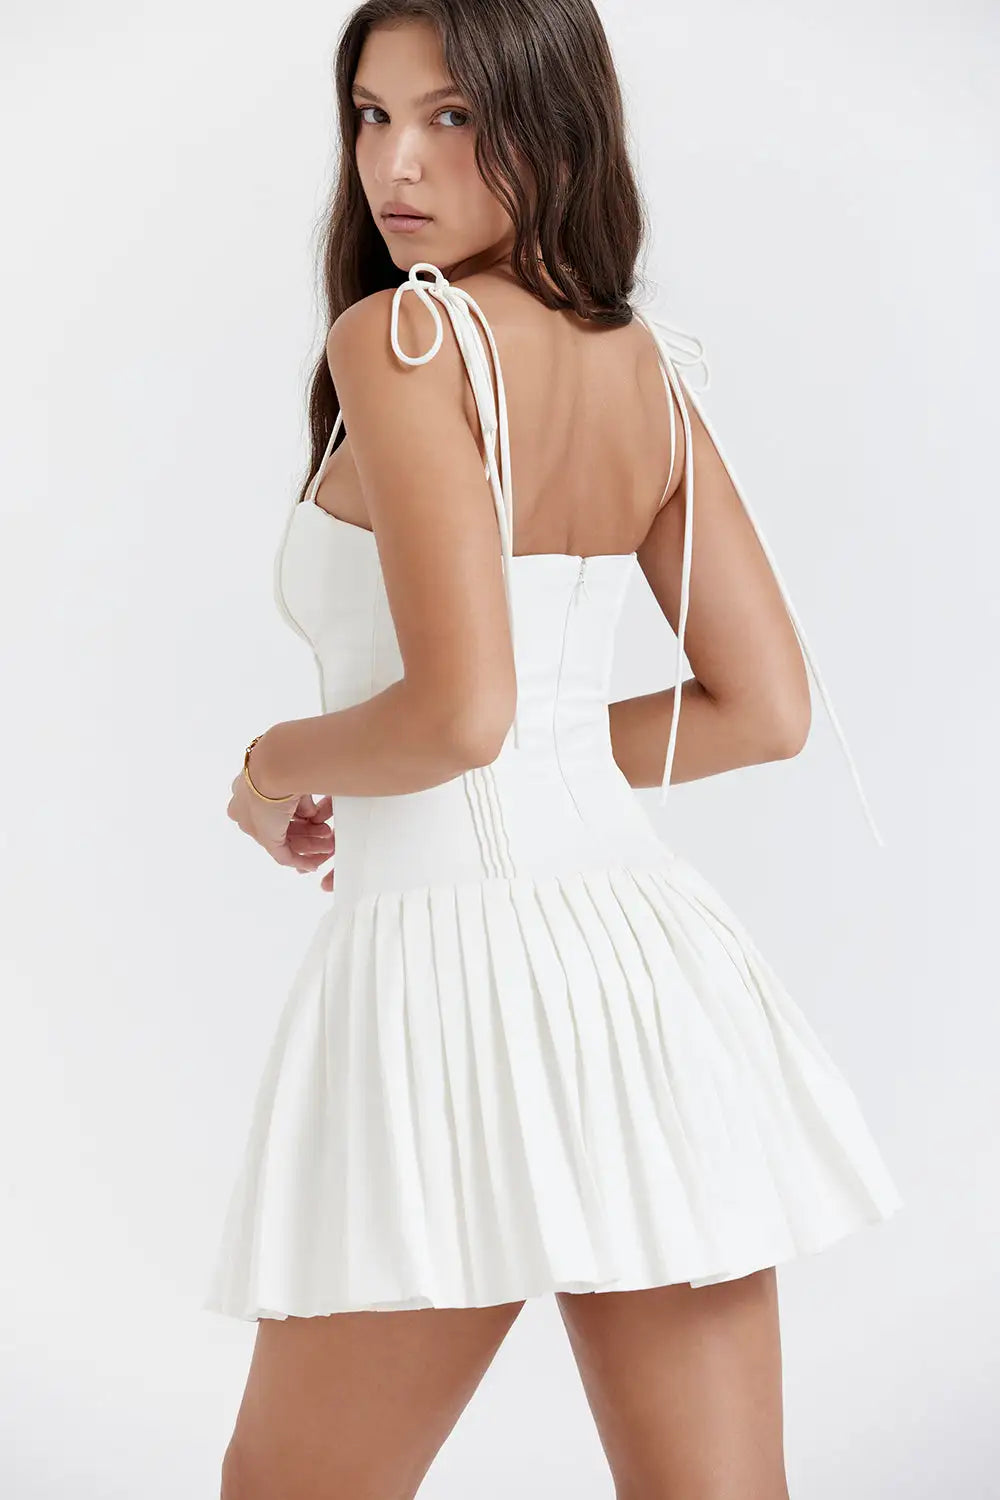 White Pleated Dress | Atherea - Atherea